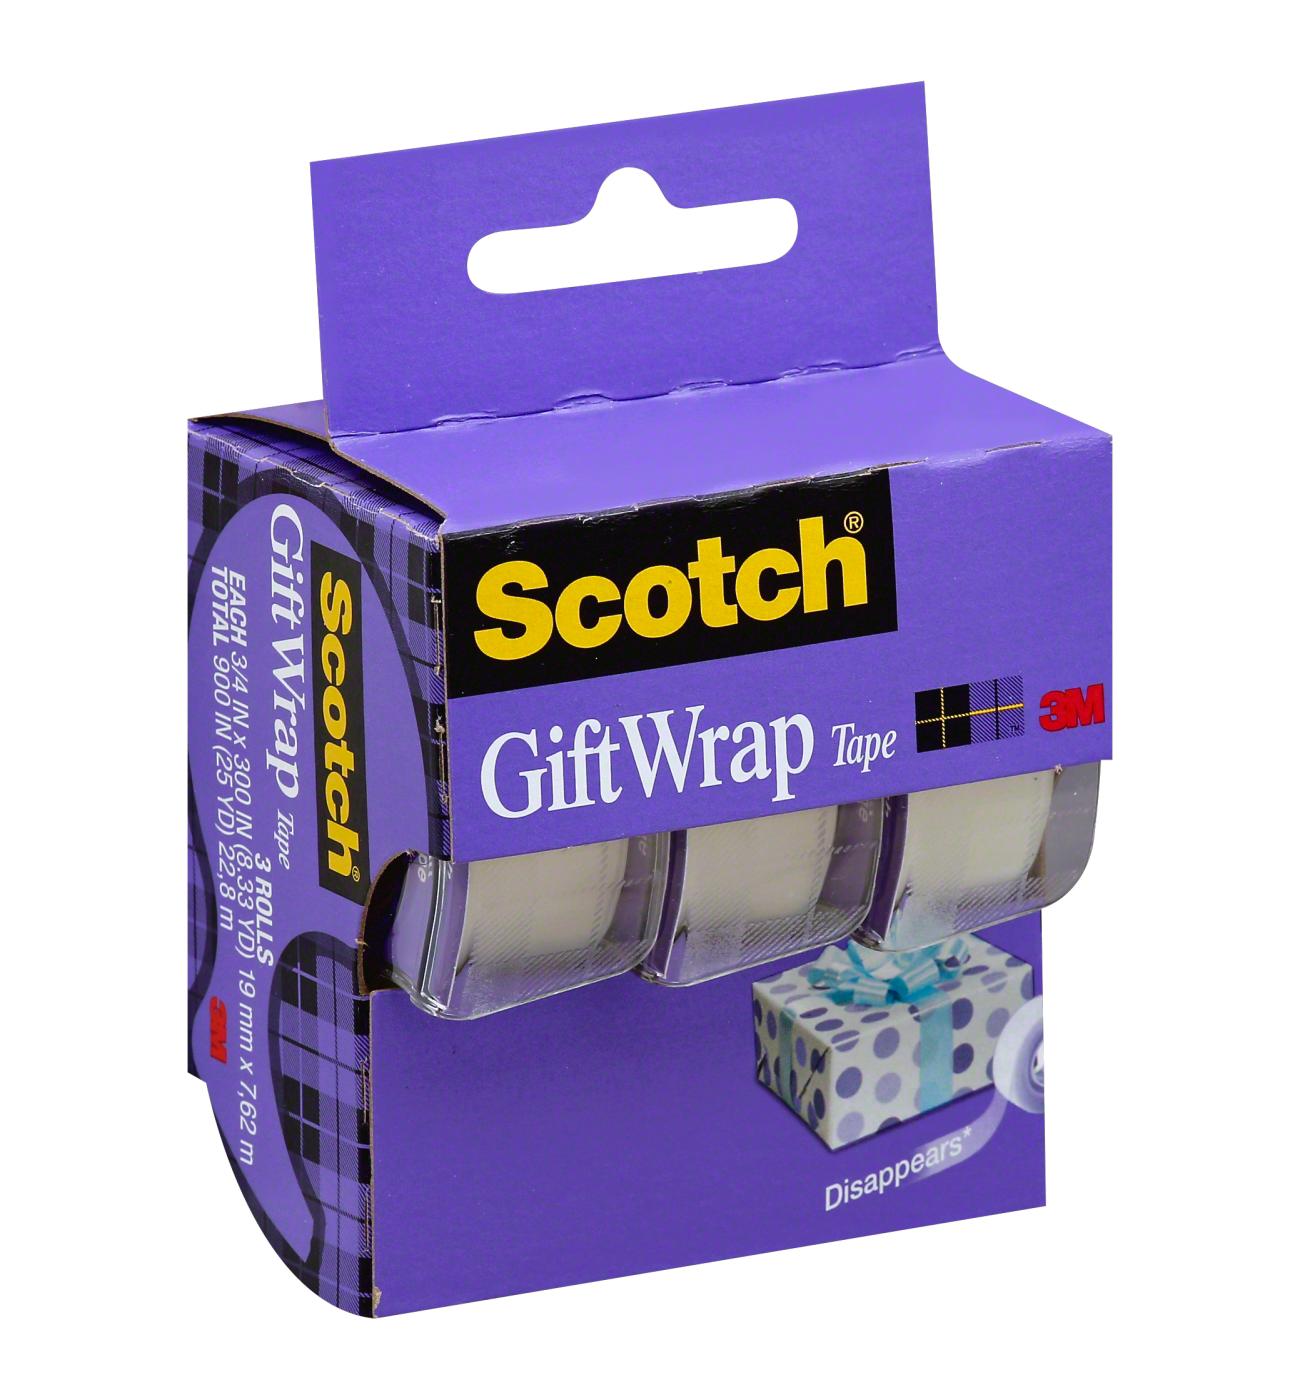 Scotch Satin Finish Gift Wrap Tape Dispensered Rolls; image 1 of 3